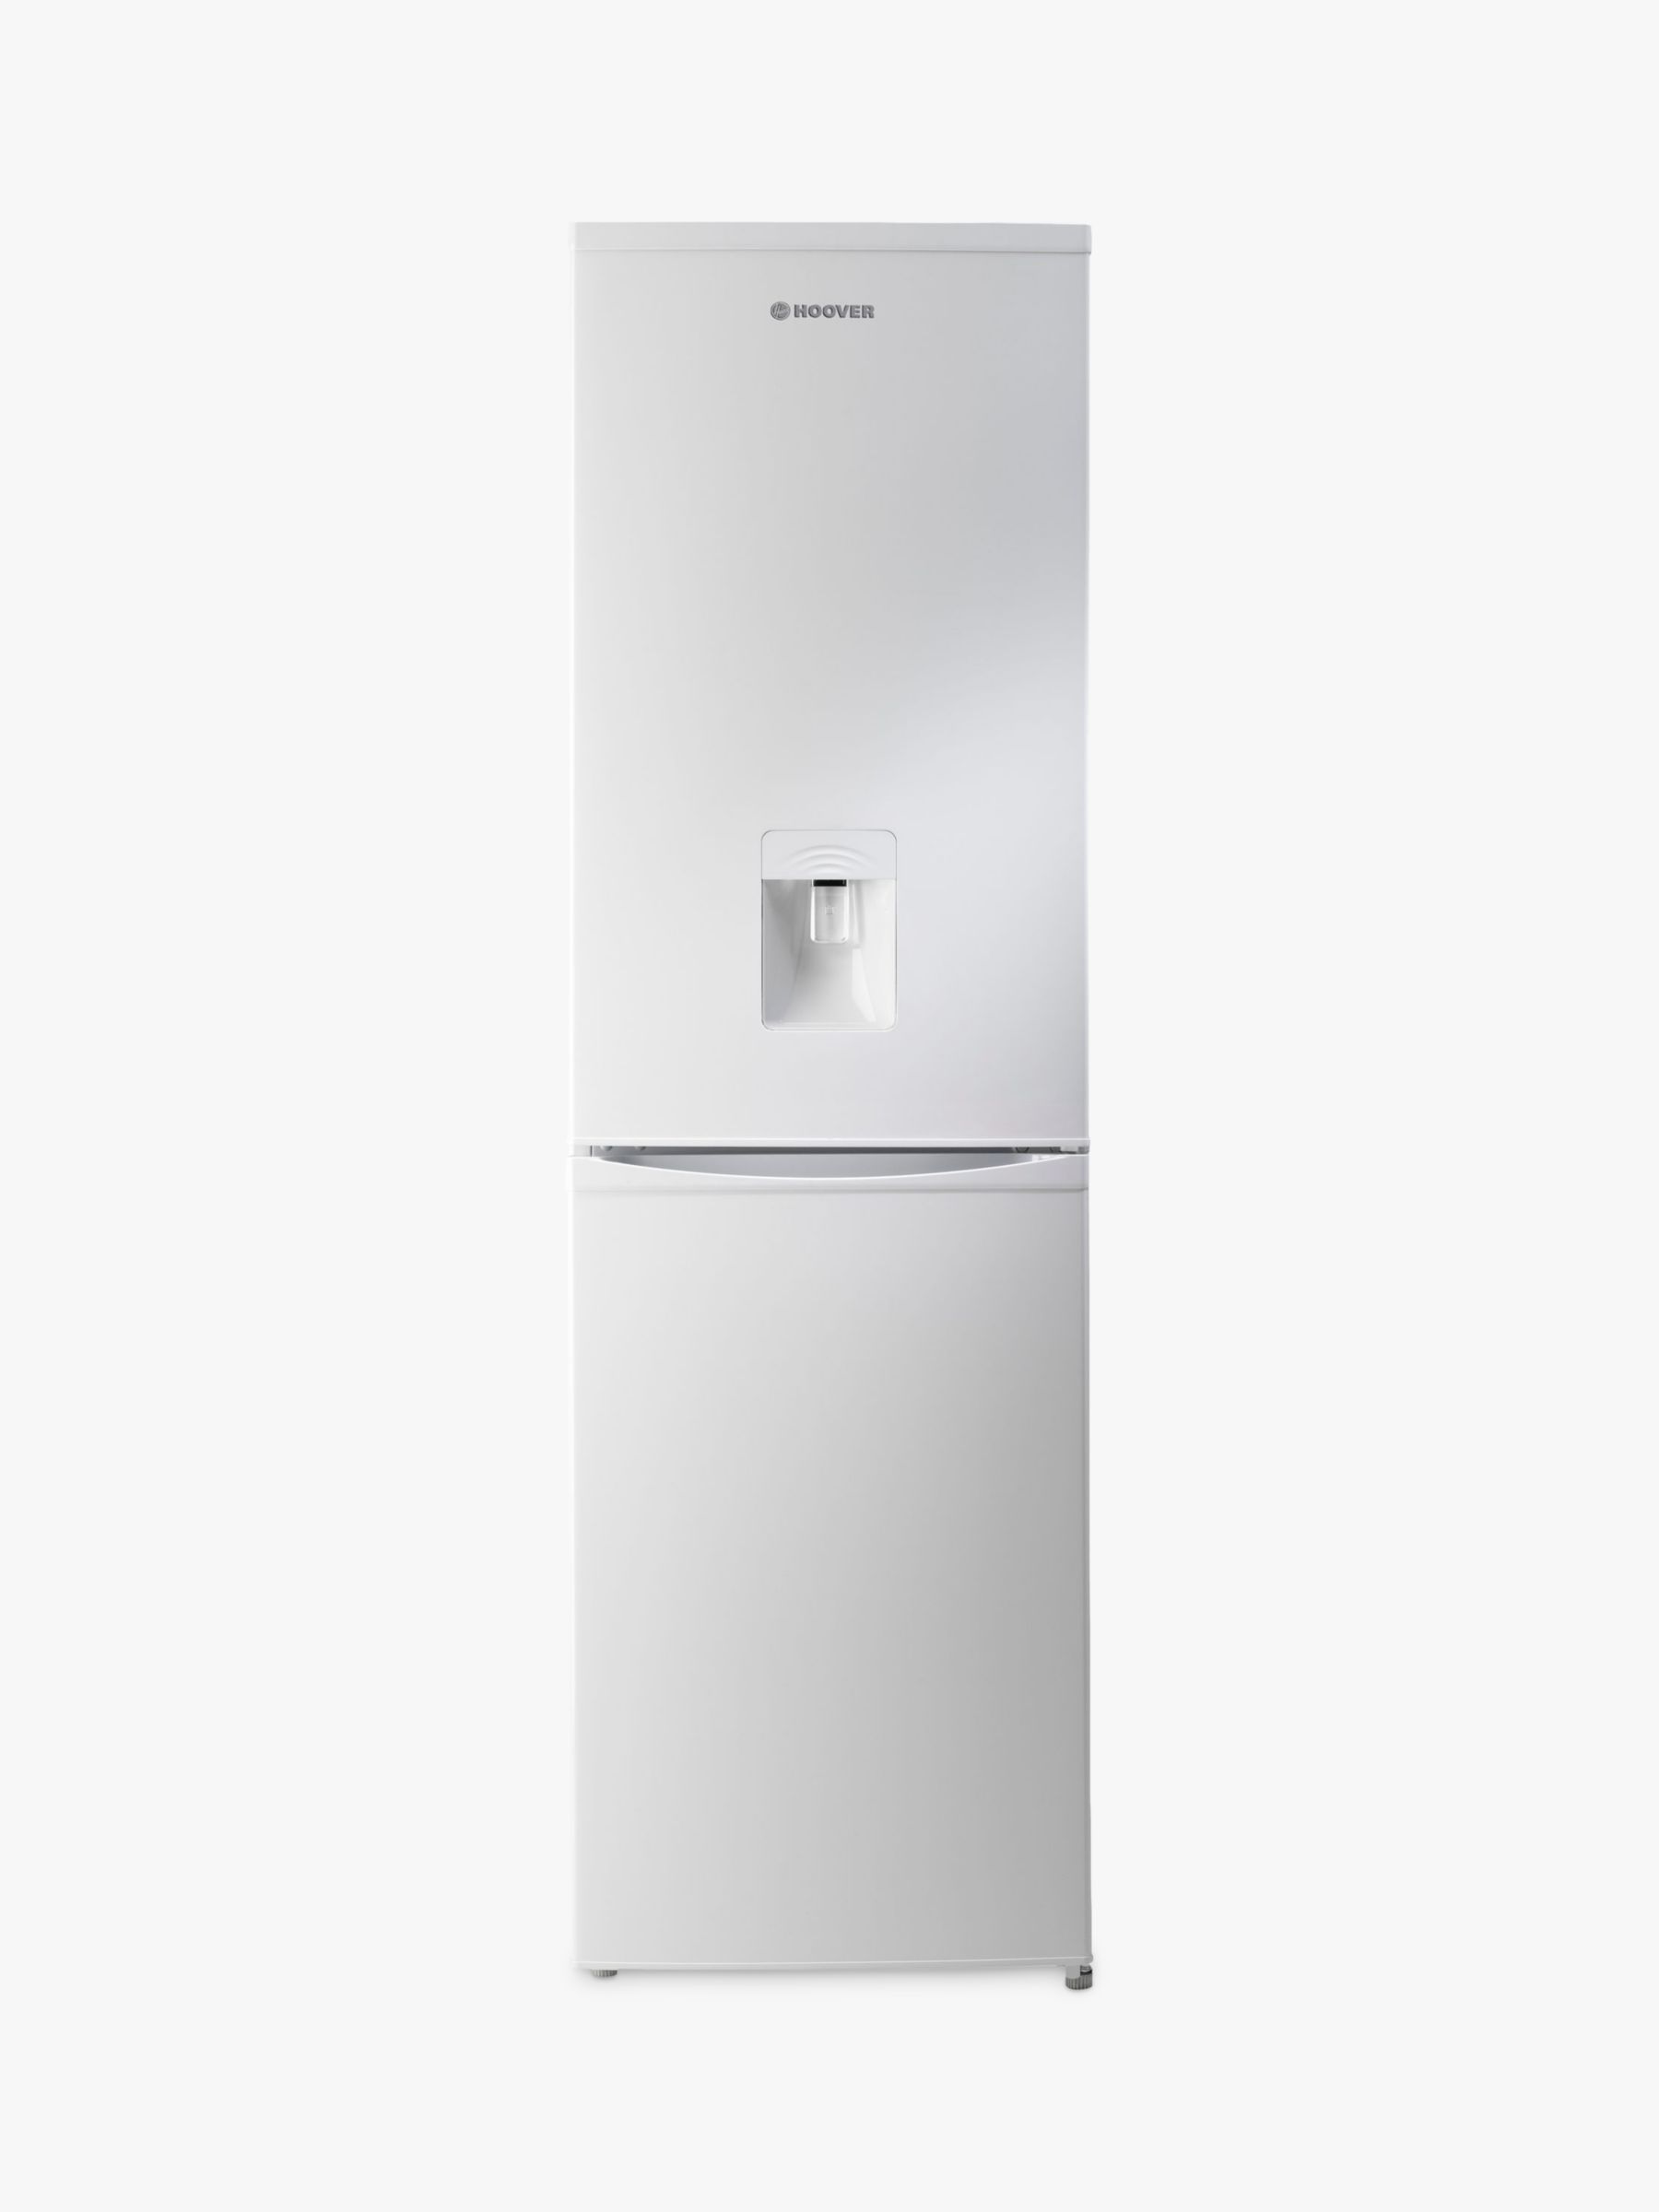 Hoover HVBF5182WWK Freestanding Frost Free Fridge Freezer, A+ Energy Rating 55cm Wide, White